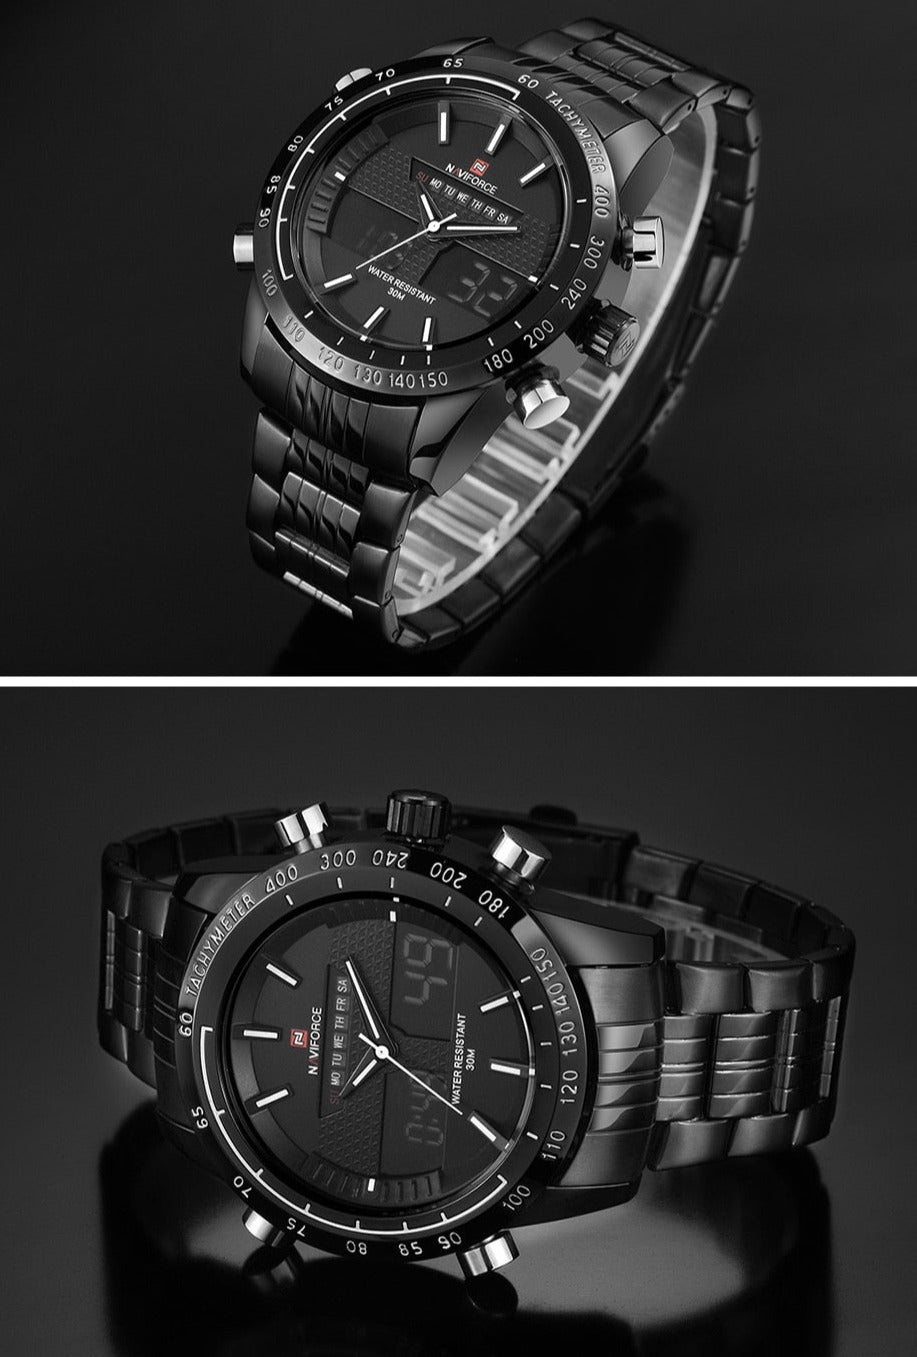 2x Black Naviforce 9024 Sport Stainless Steel Digital Analogue Quartz Watch from fiveto.co.uk